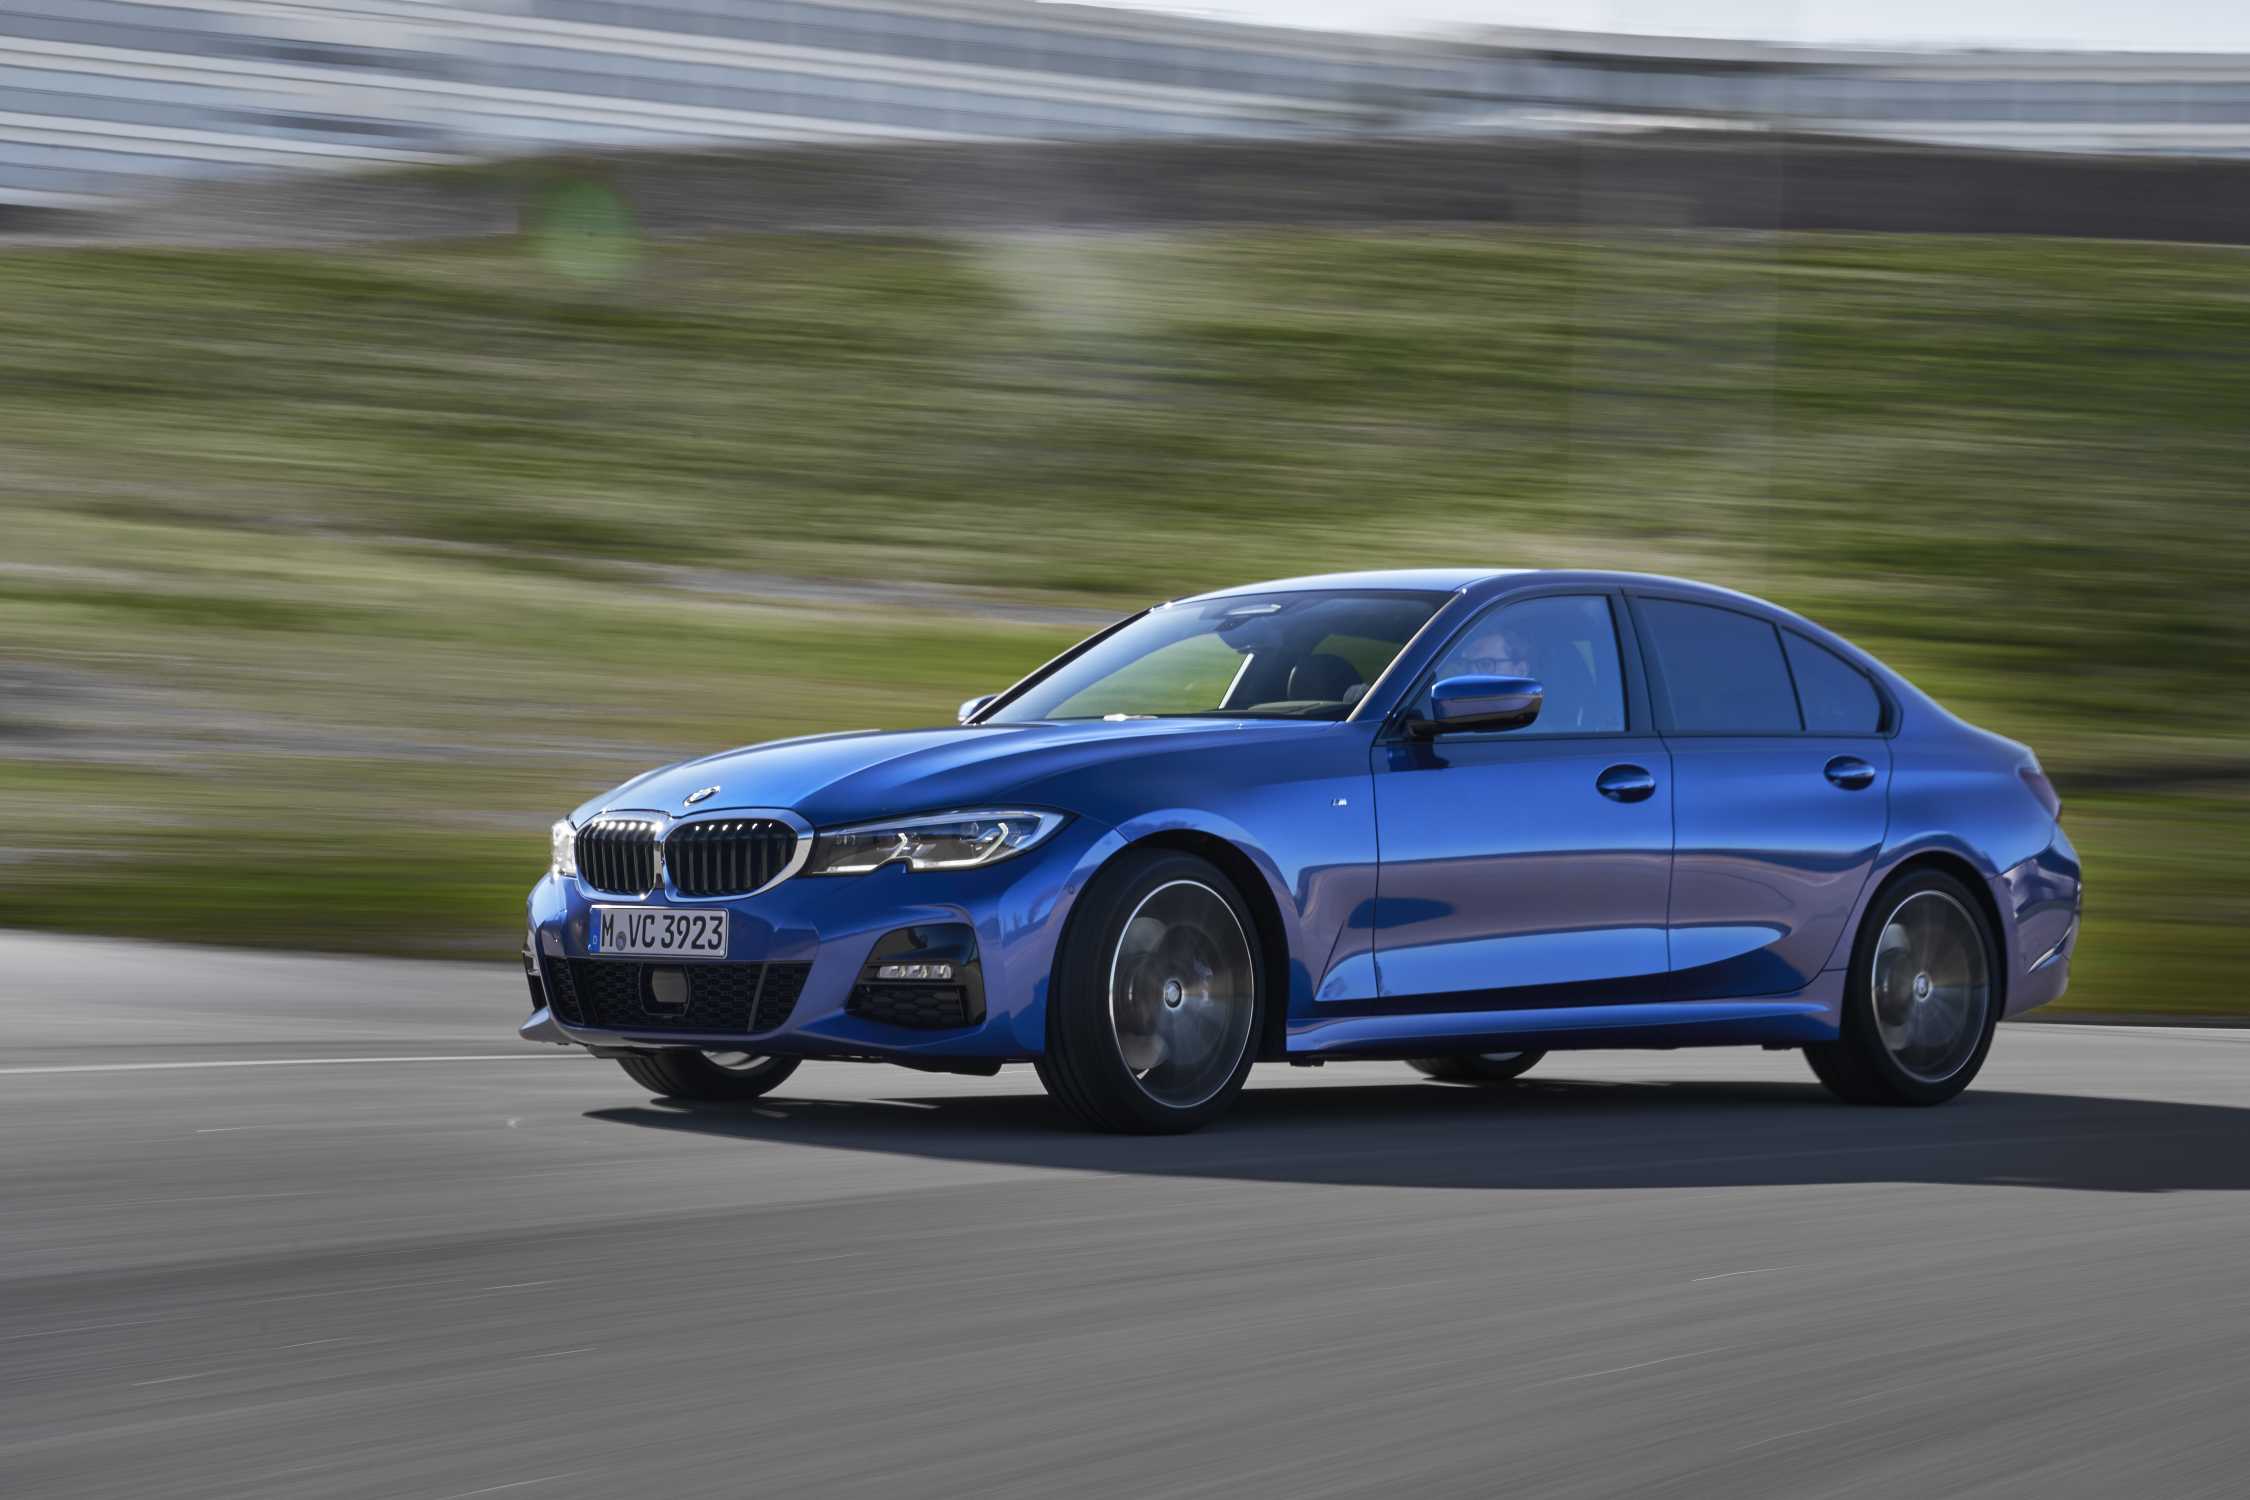 The all-new BMW 330i, Model M Sport, Portimao blue metallic, Rim 19” Styling 791 M (12/2018).